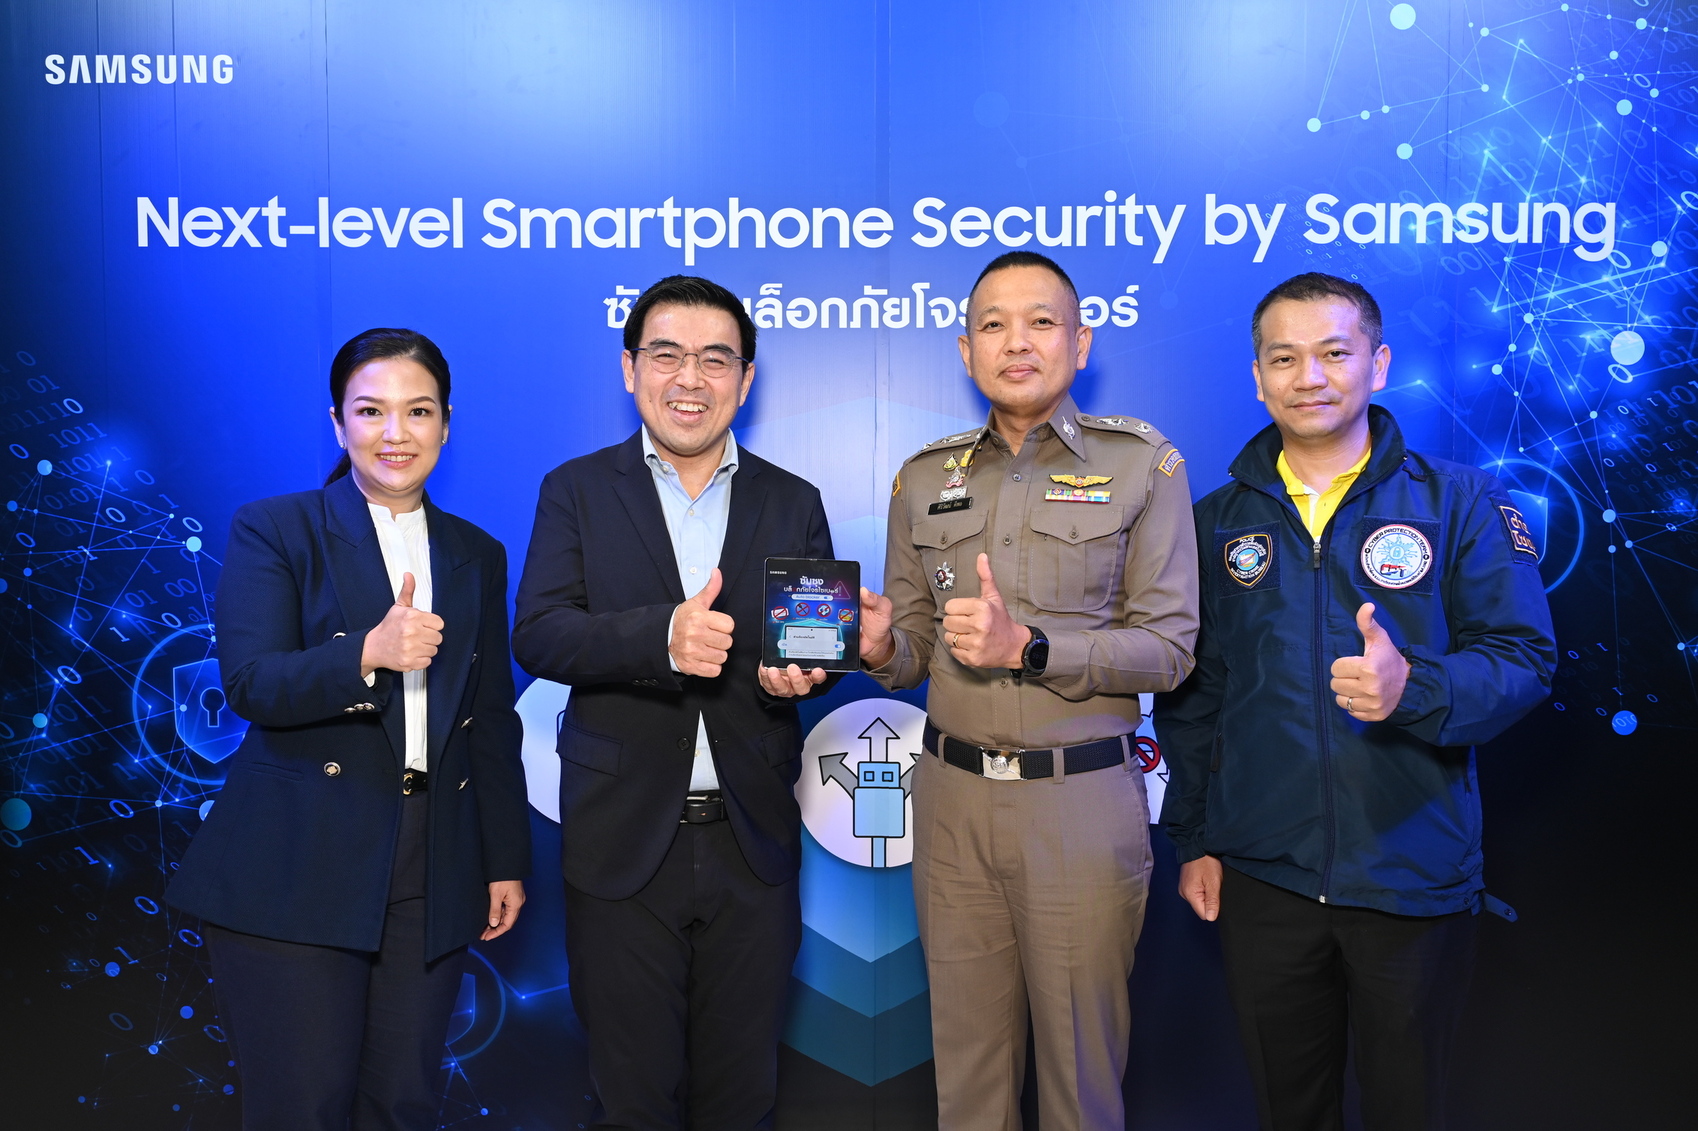 Next level smartphone security by Samsung 5 | Auto Blocker | Auto Blocker นวัตกรรมเพื่อความปลอดภัยสูงสุดให้ผู้ใช้ซัมซุง กาแล็คซี่